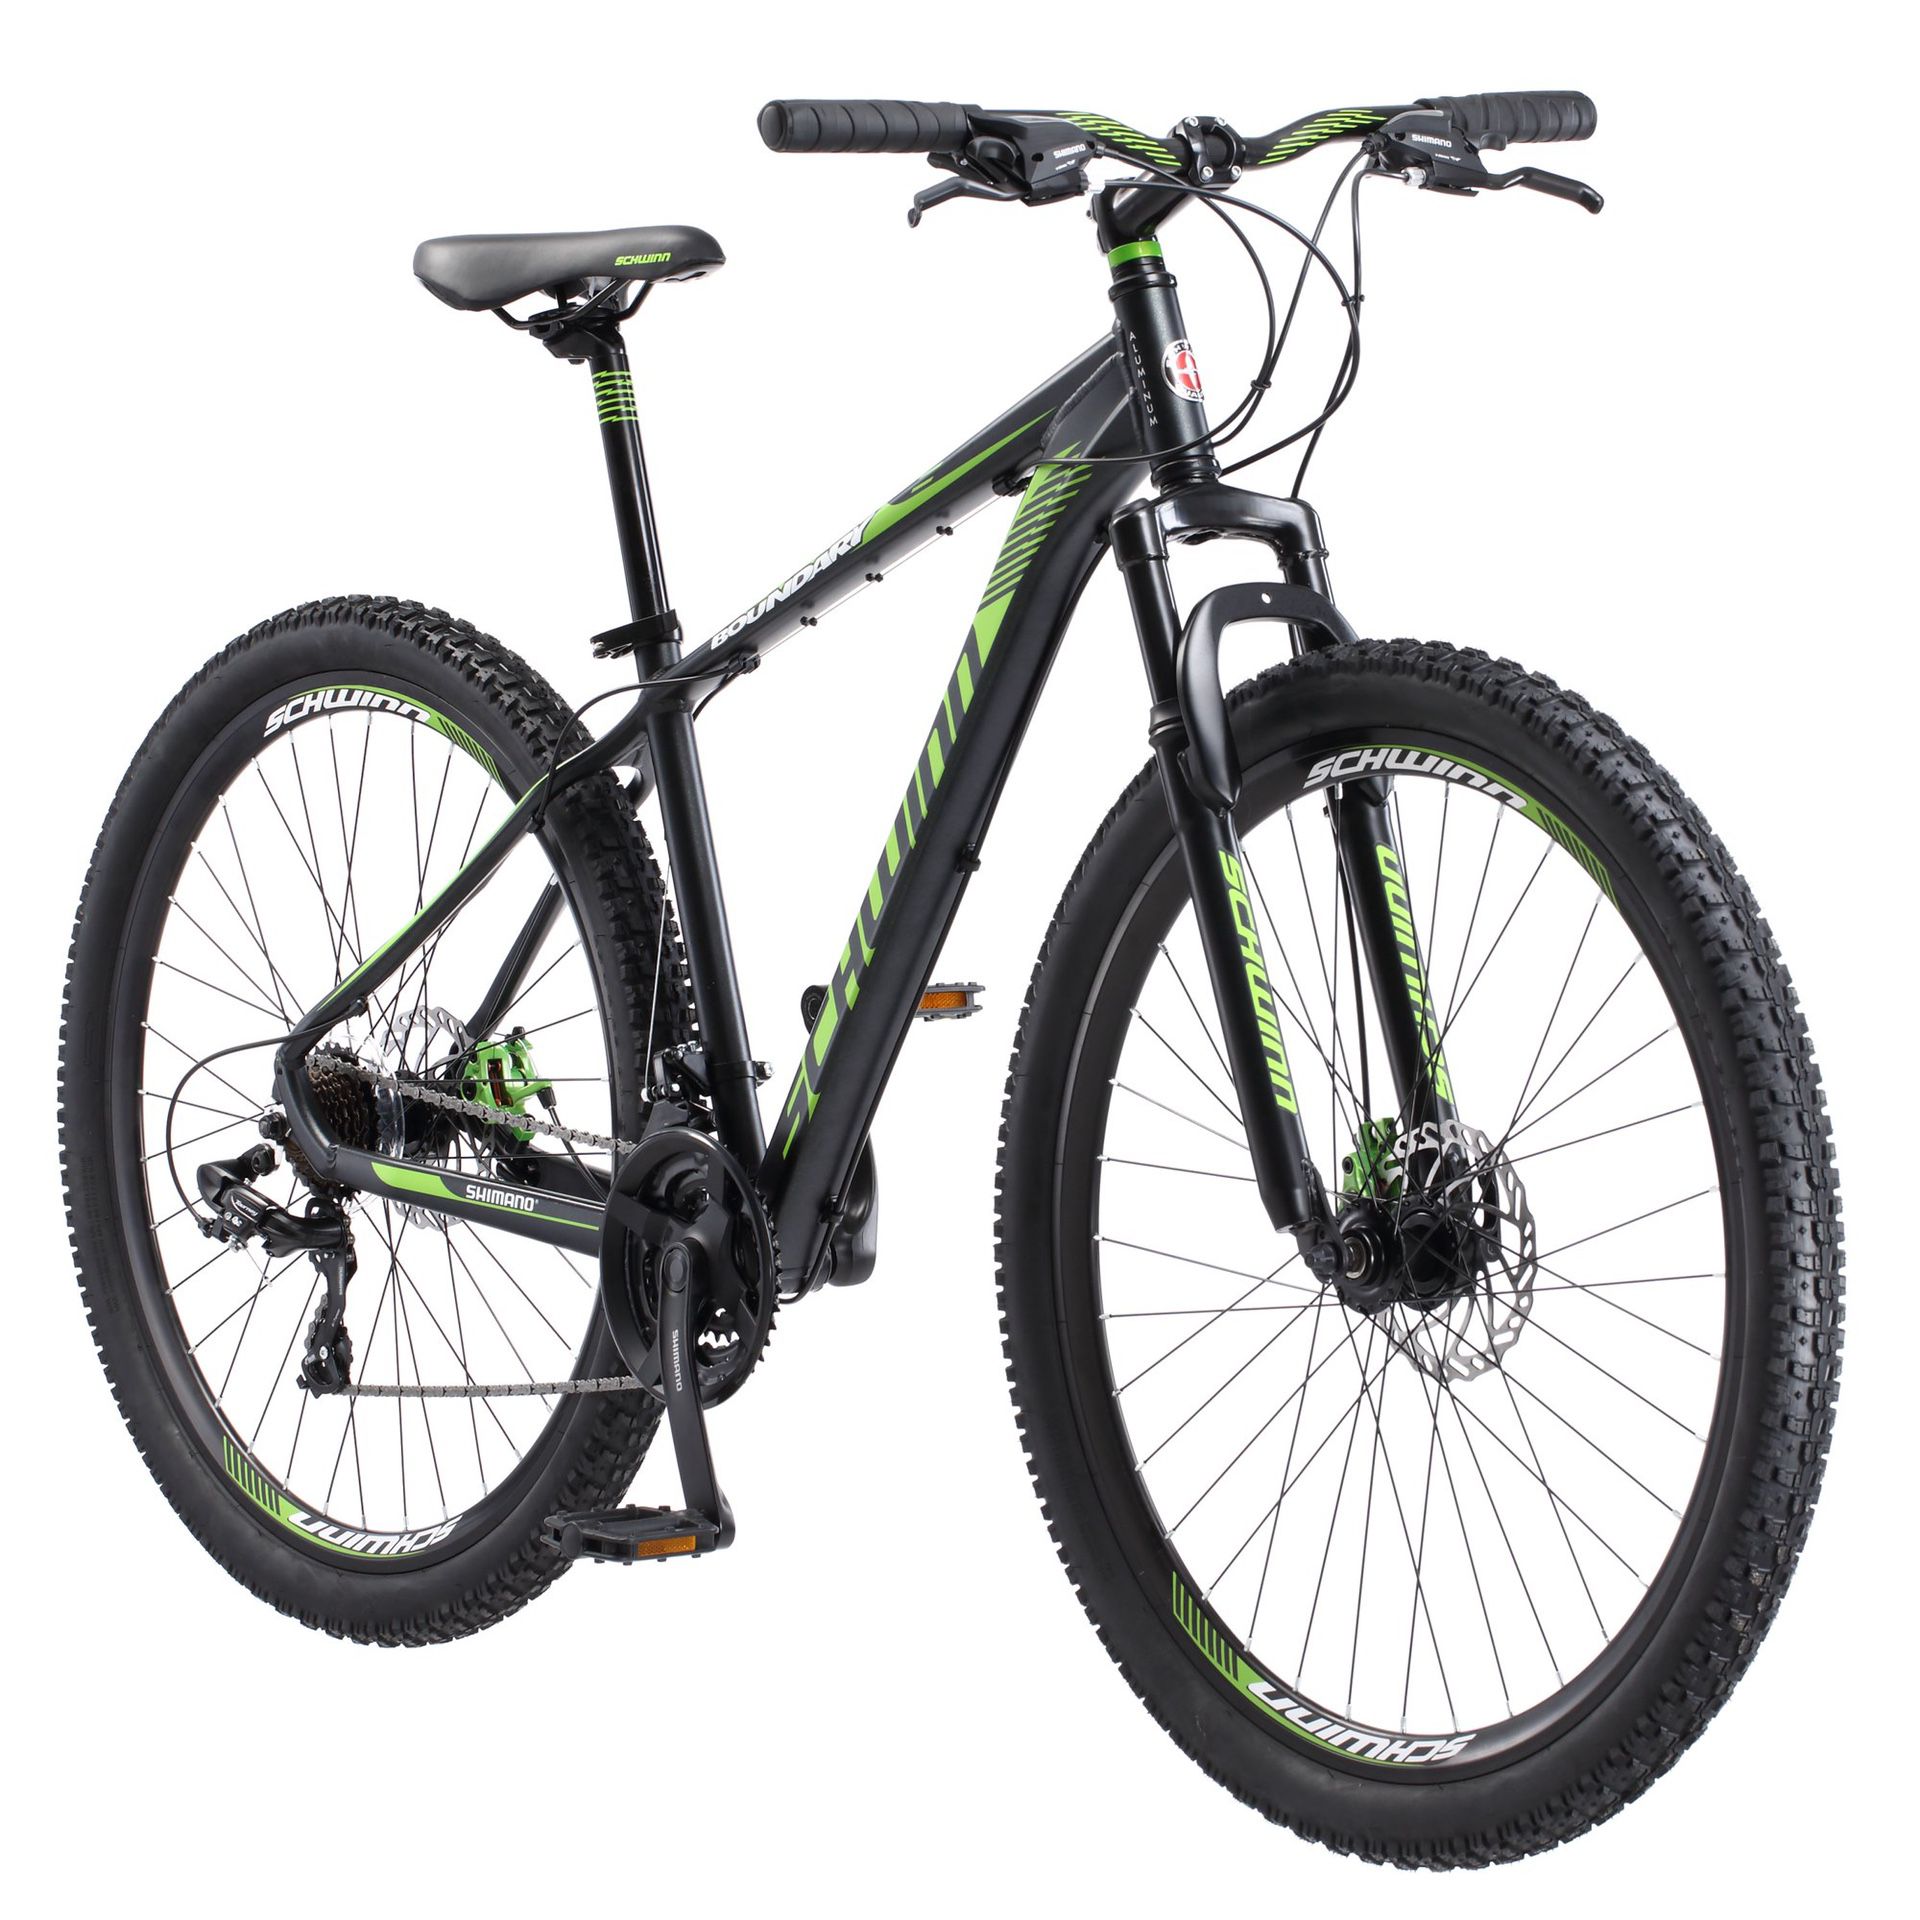 New, Schwinn Boundary Men's Mountain Bike, 29-inch wheels, 21 speeds, Dark Green and Black